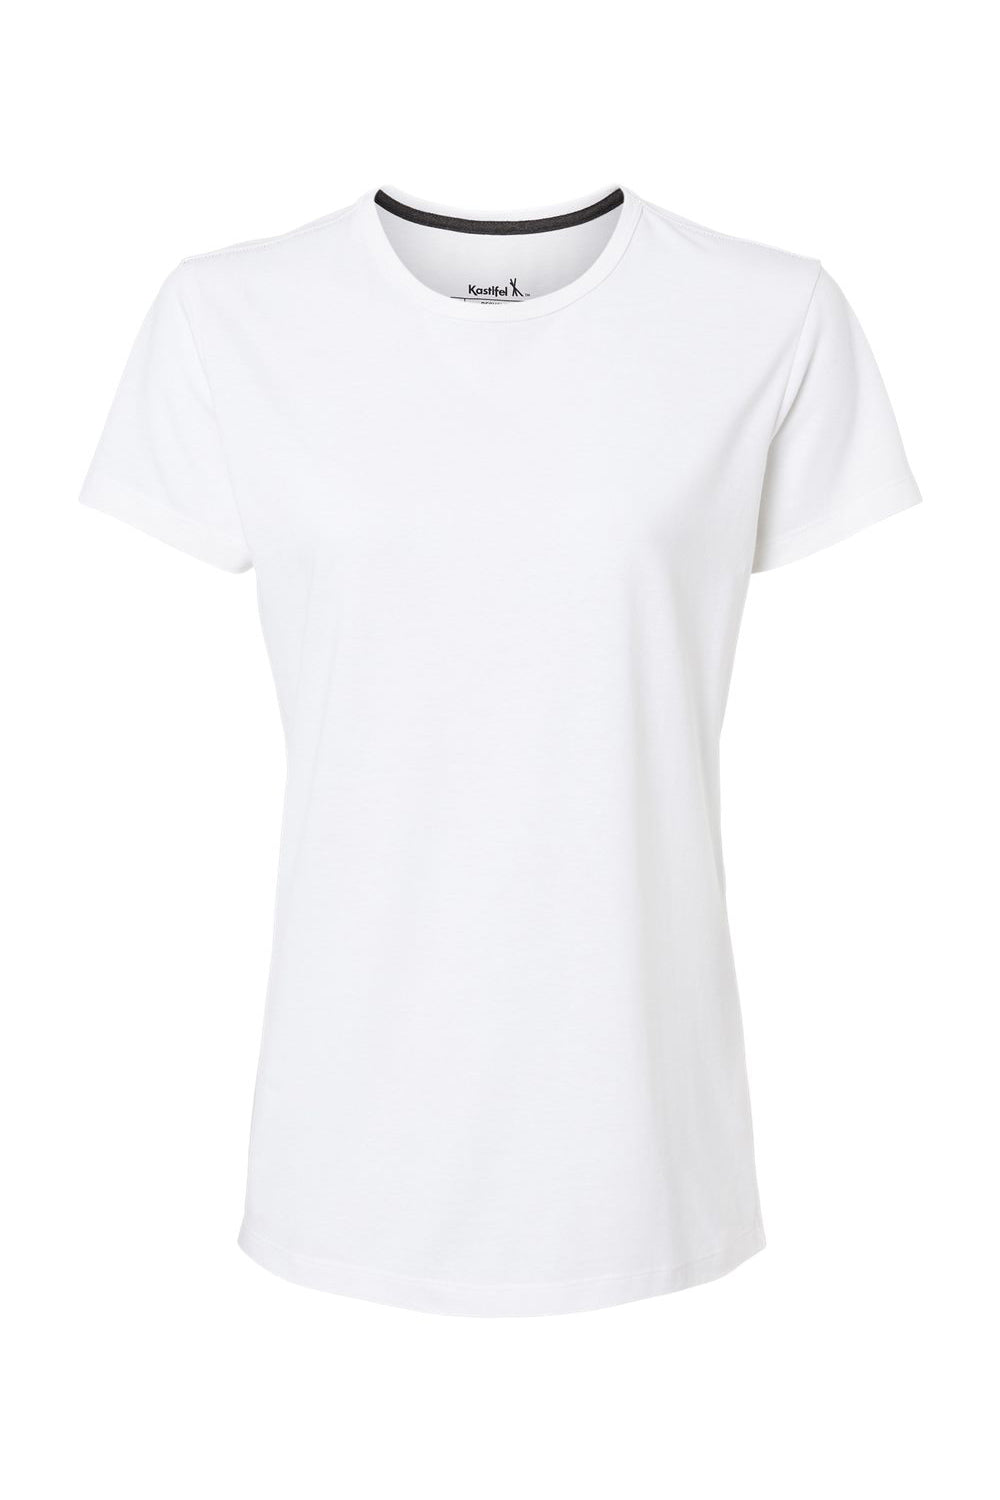 Kastlfel 2021 Womens RecycledSoft Short Sleeve Crewneck T-Shirt White Flat Front